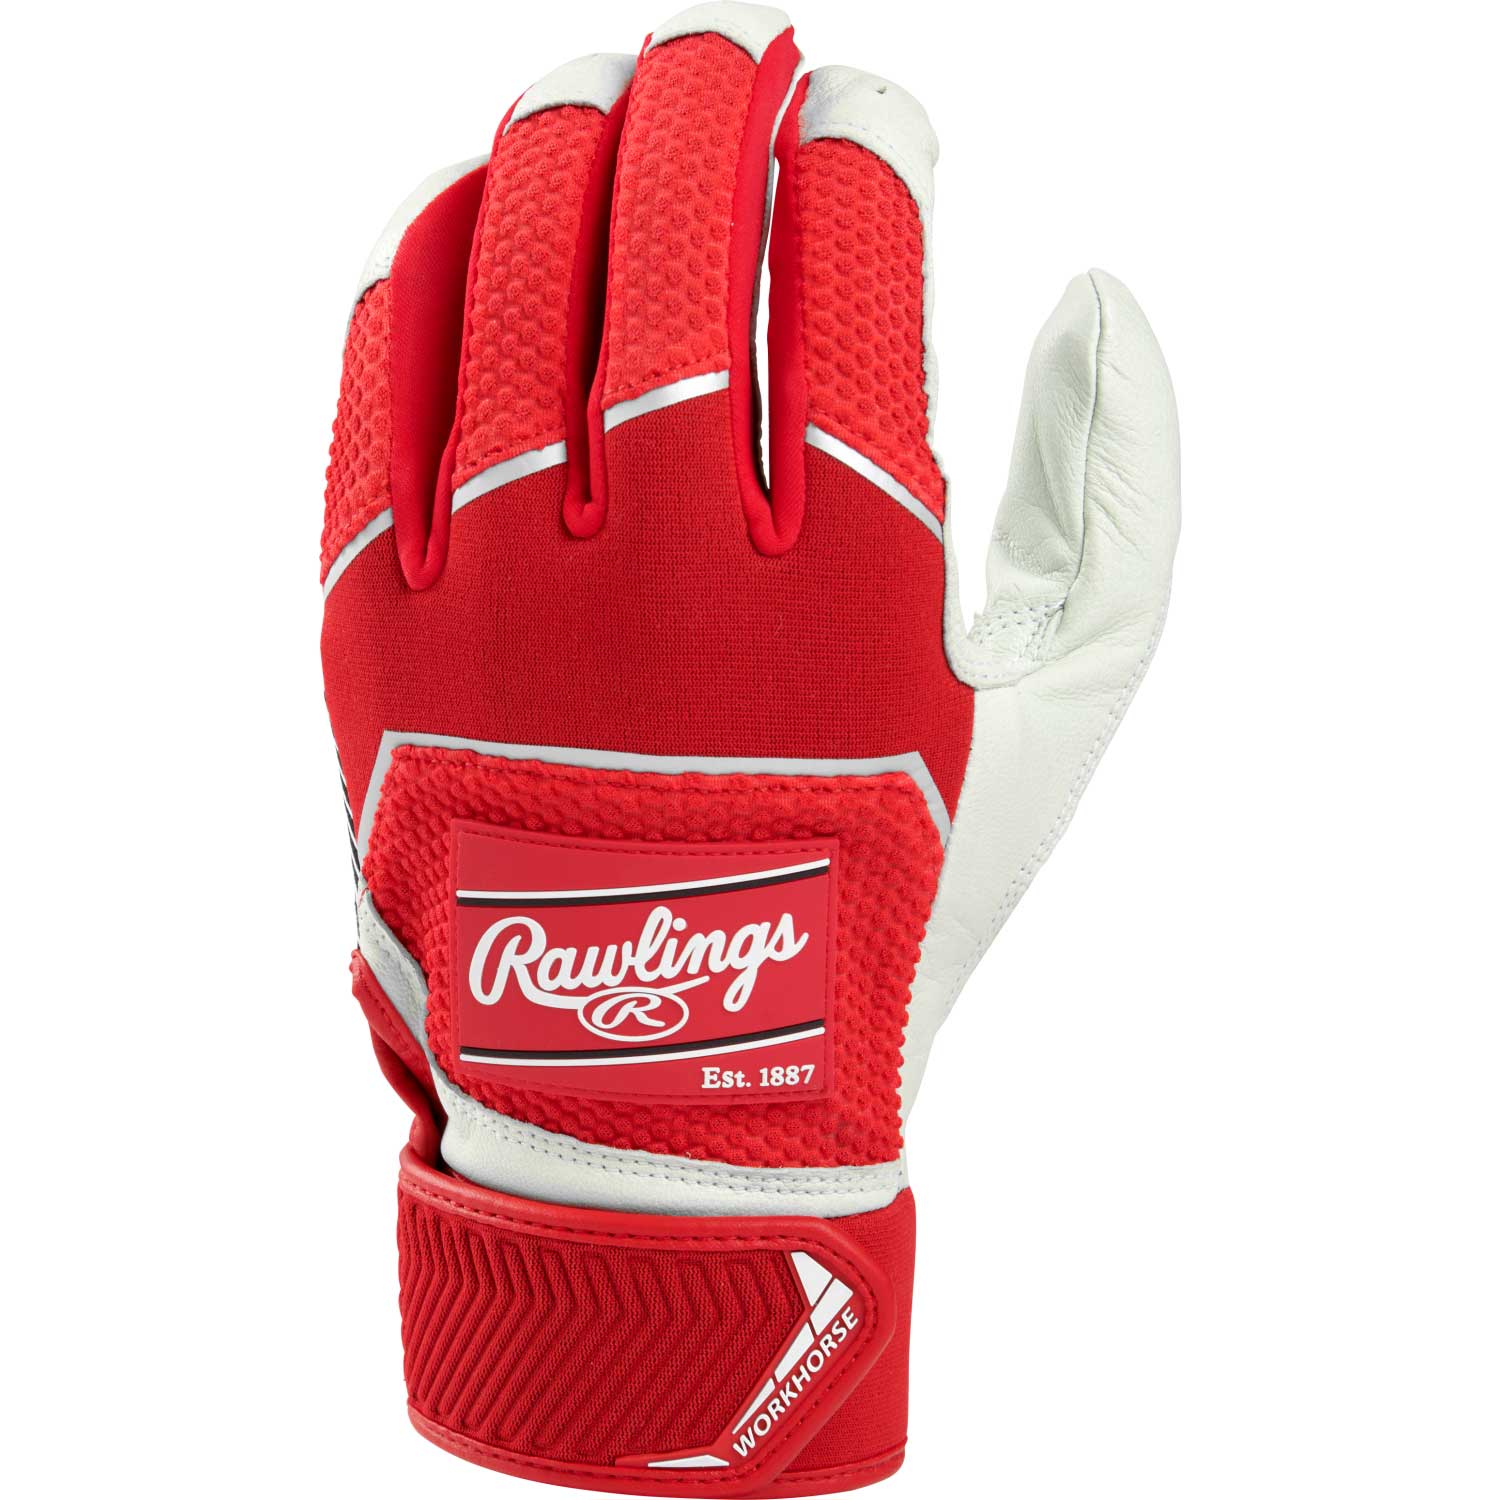 Rawlings Workhorse Pro Batting Gloves